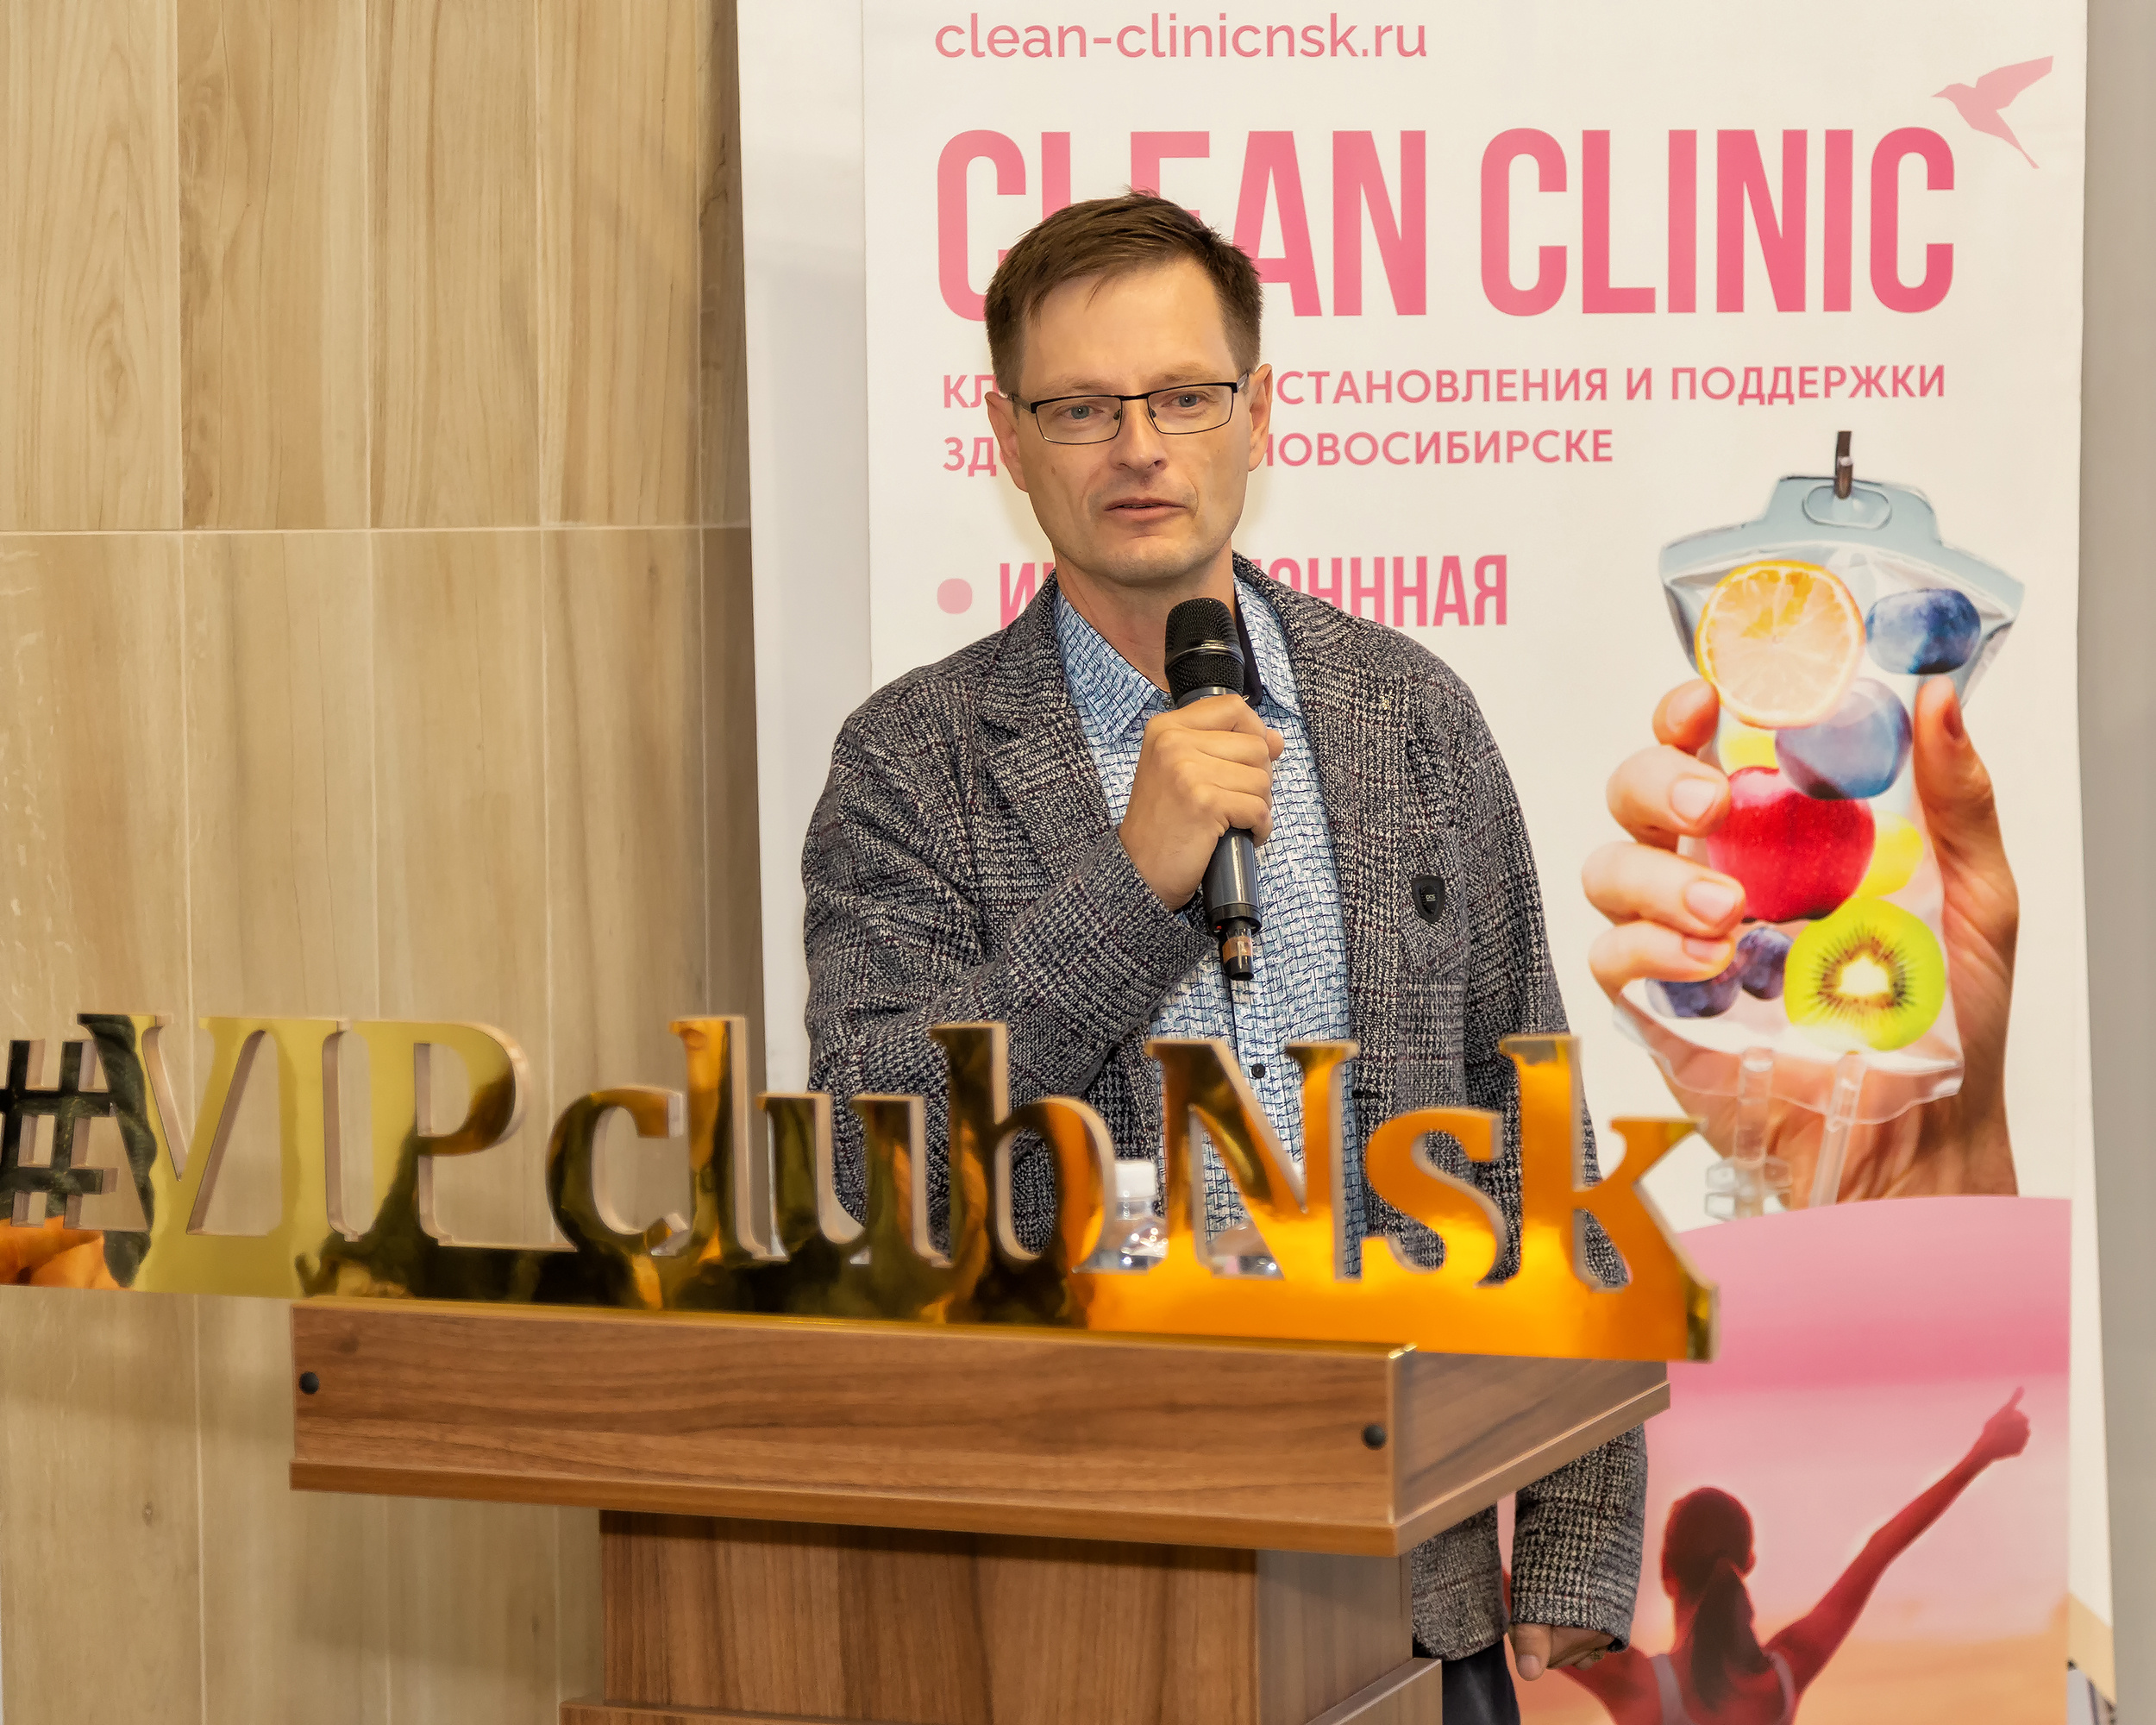 Учредитель медицинского центра Clean Clinic к.м.н. Вячеслав Романов